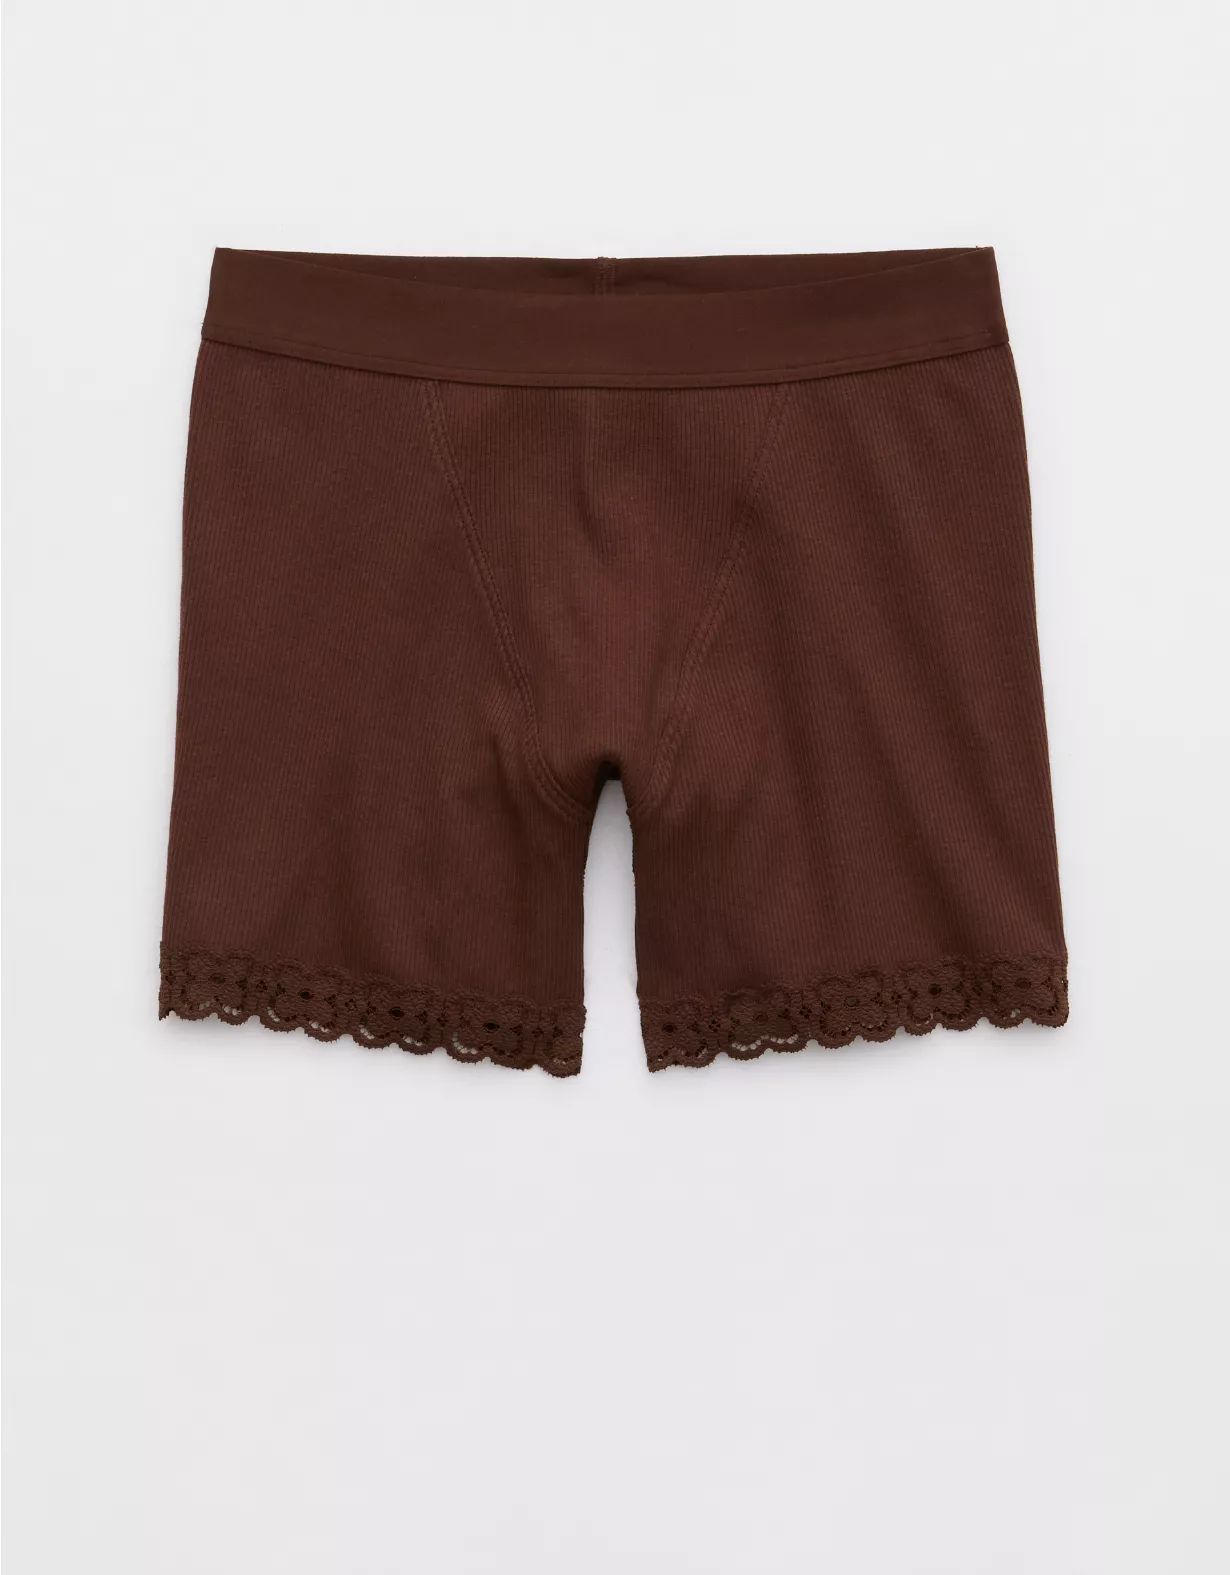 Superchill Cotton Cozy Lace Boyshort Underwear | Aerie